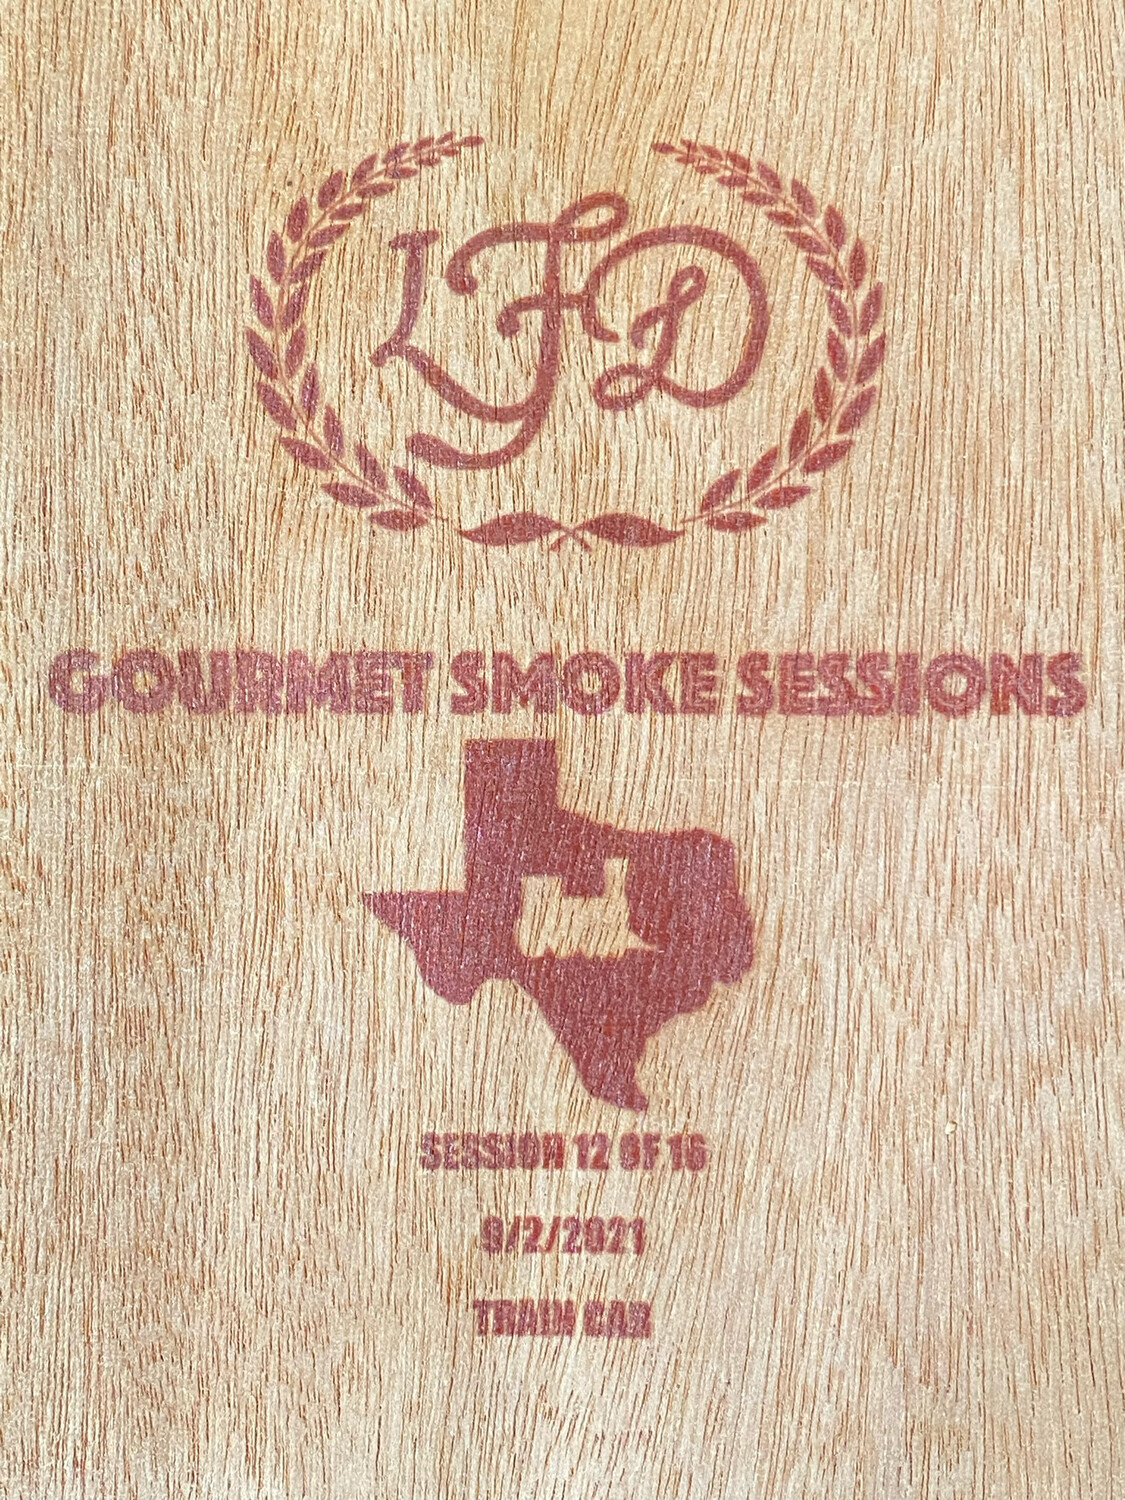 "el Tren de Texas" Gourmet Smoke Session Train Car Exclusive